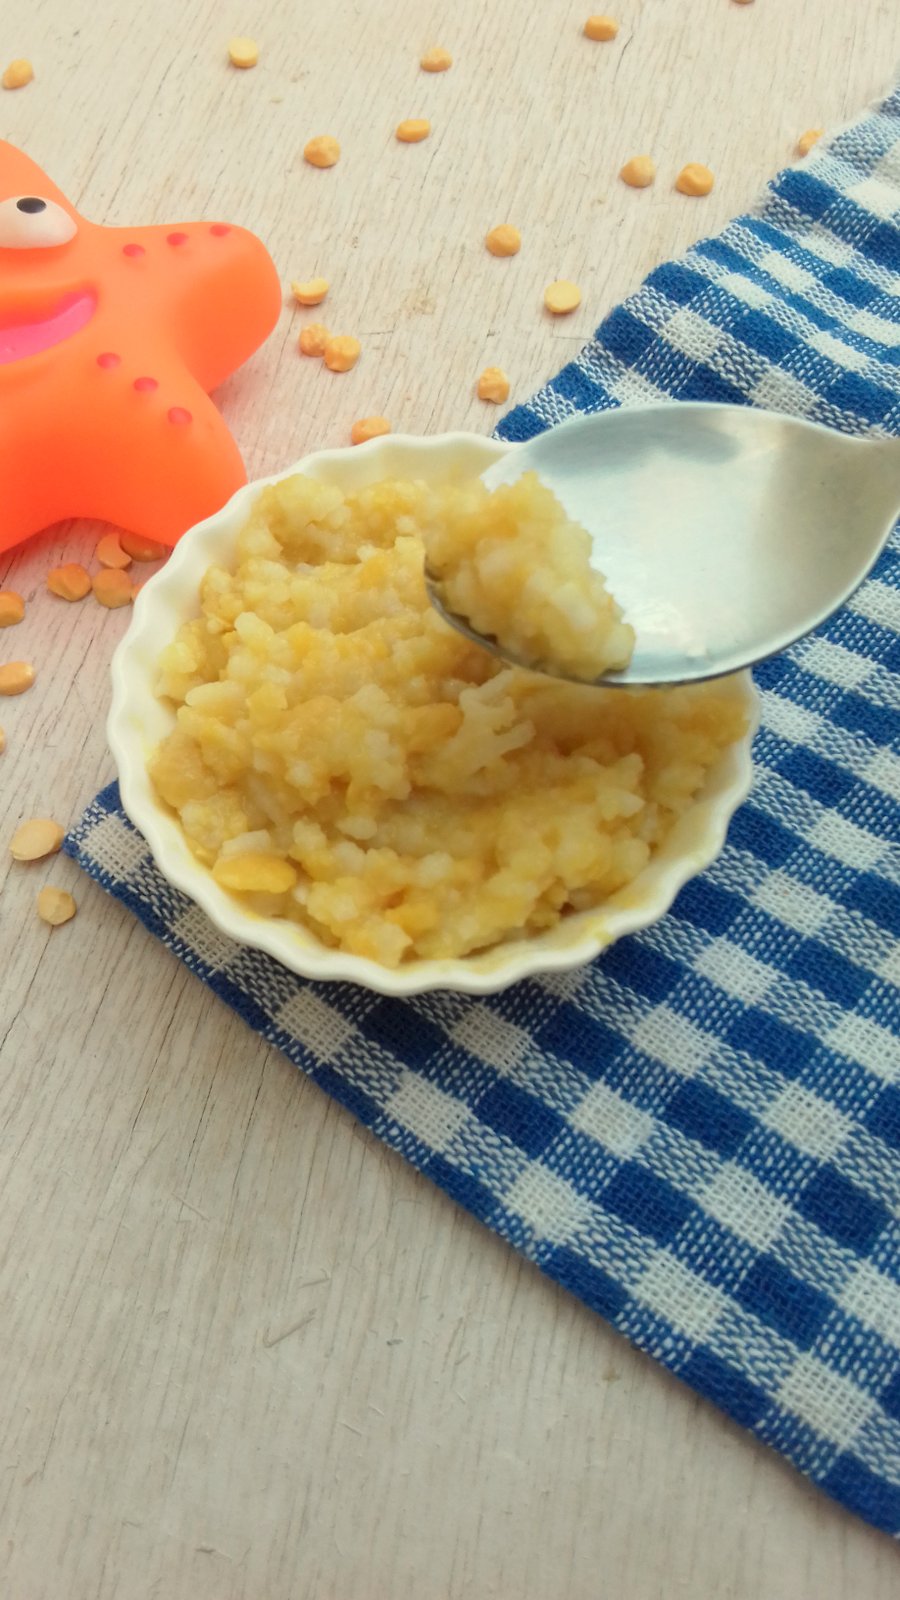 चना दाल और चावल - Bengal Gram Dal and Rice (Recipe In Hindi)